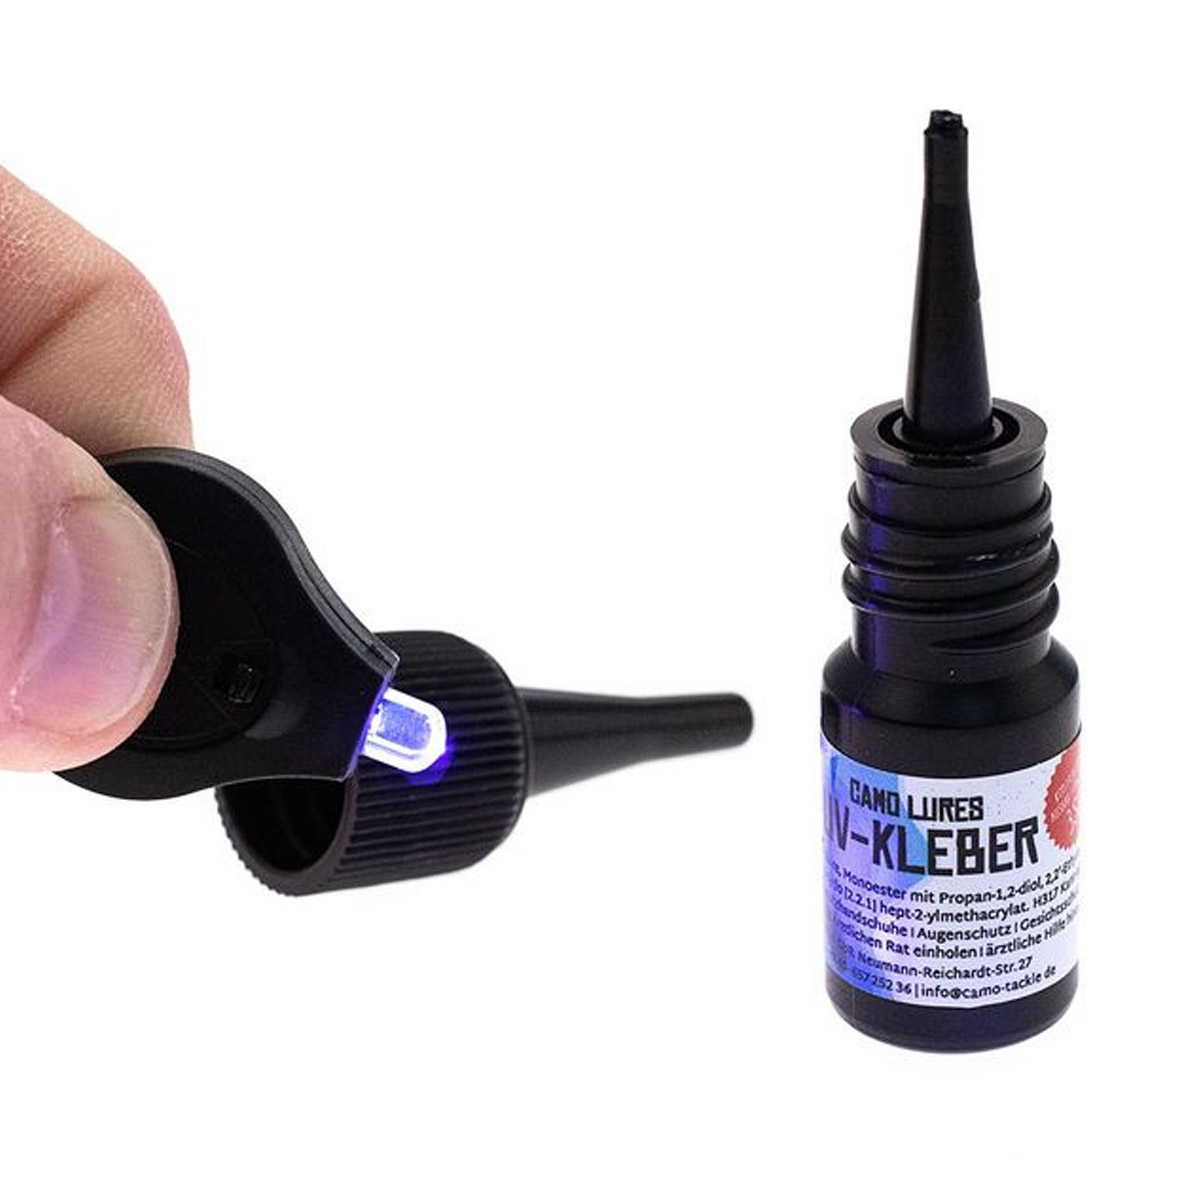 Camo Lures UV-Adhesive With UV Beamer